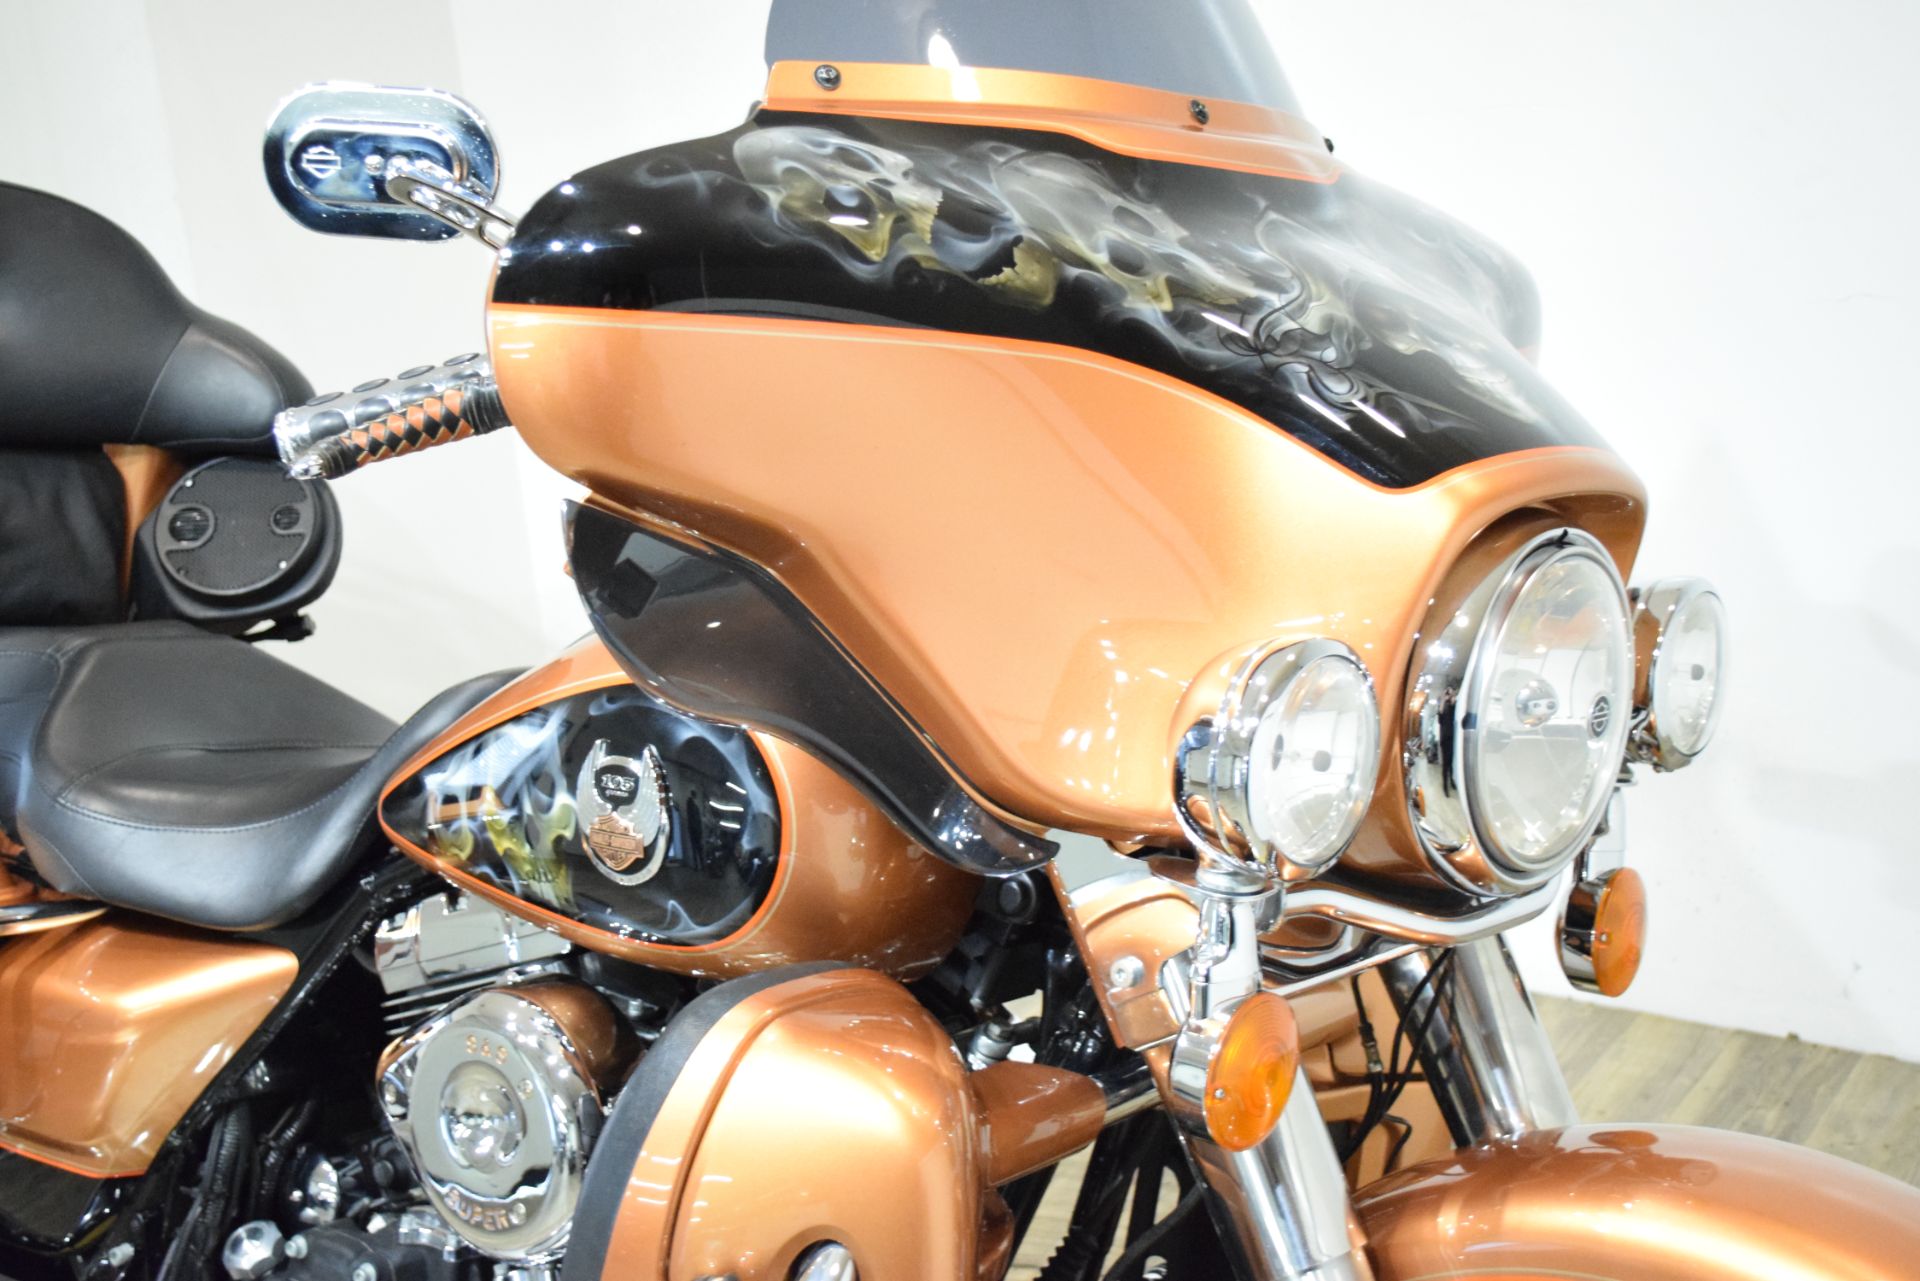 2008 Harley-Davidson Ultra Classic® Electra Glide® in Wauconda, Illinois - Photo 3